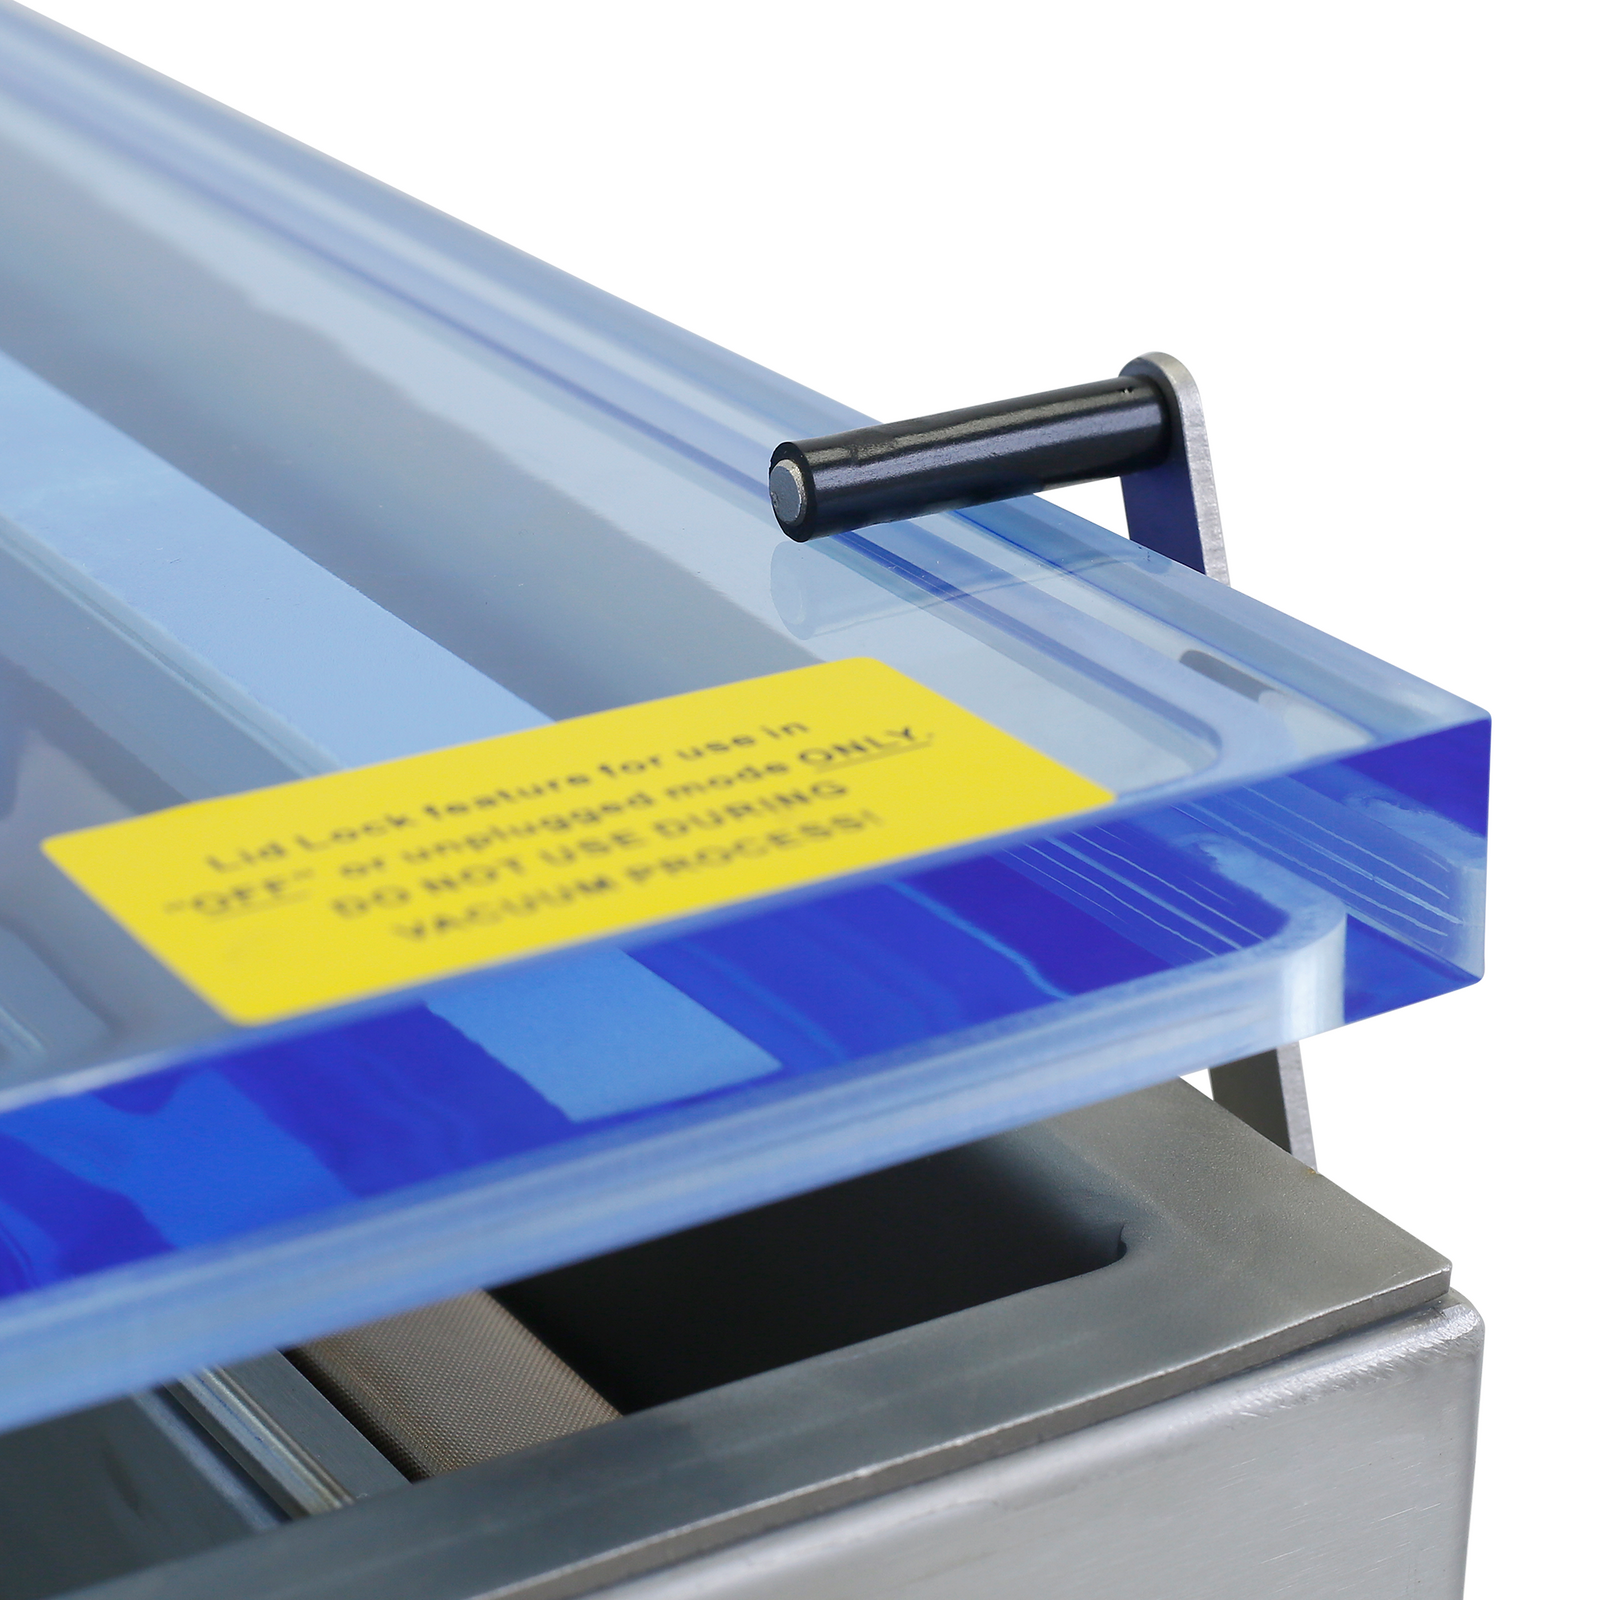 Closure bracket and the transparent blue lid of the JORES TECHNOLOGIES® vacuum sealer